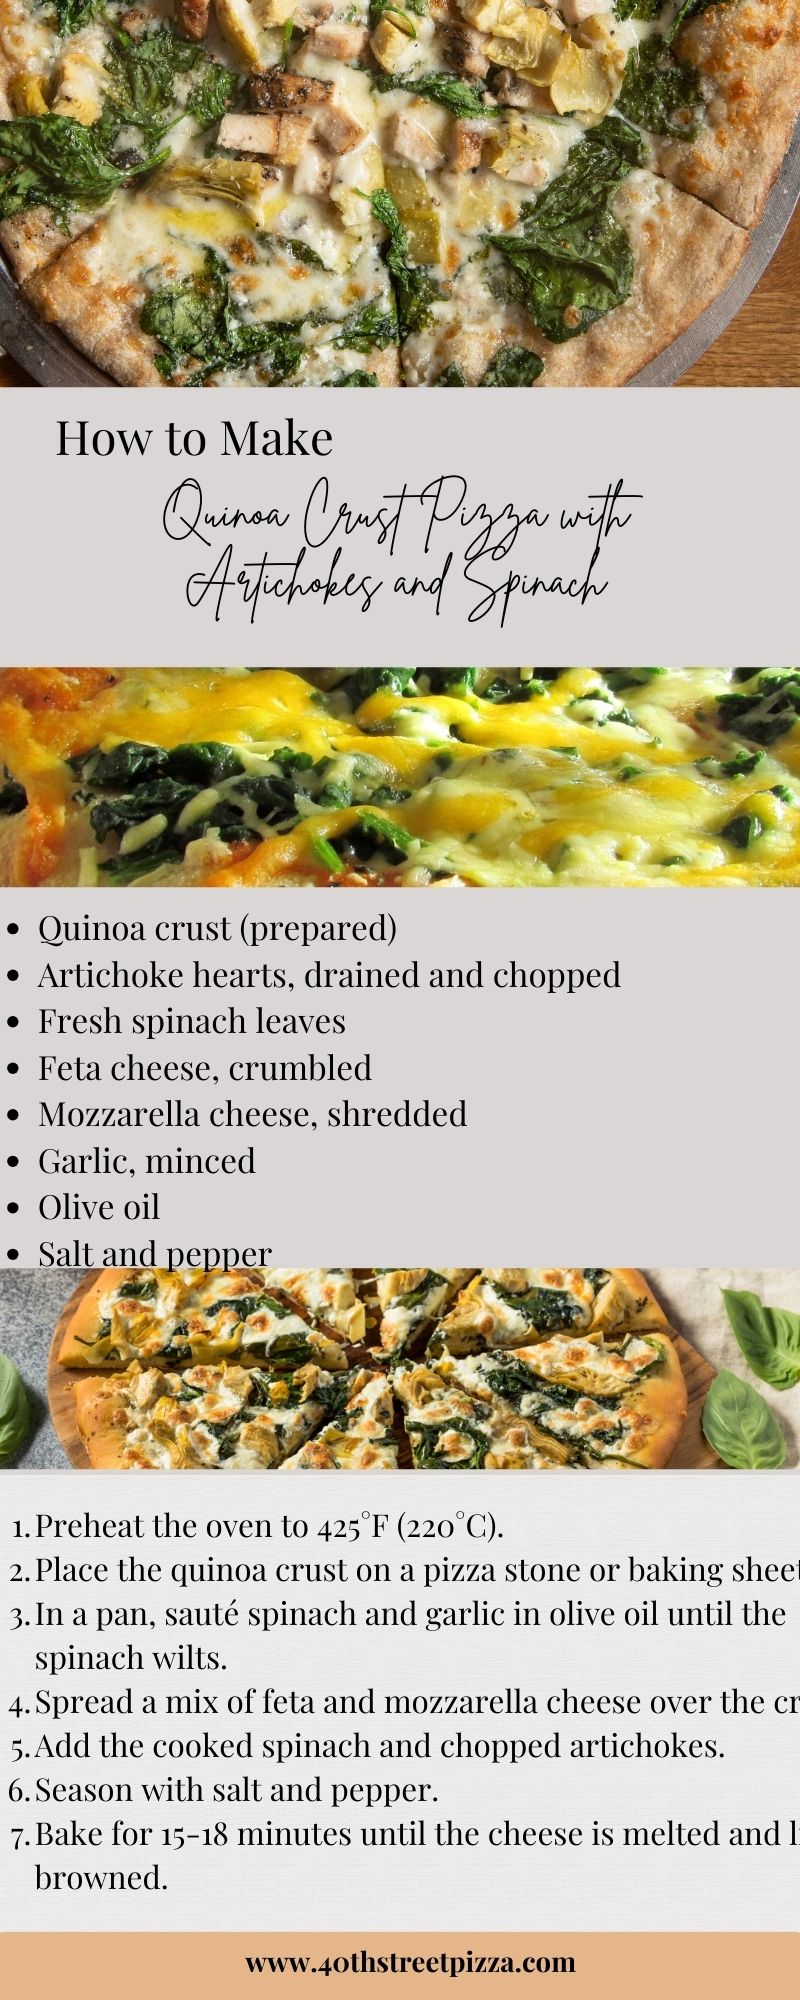 Quinoa Crust Pizza with Artichokes and Spinach infpgraphic